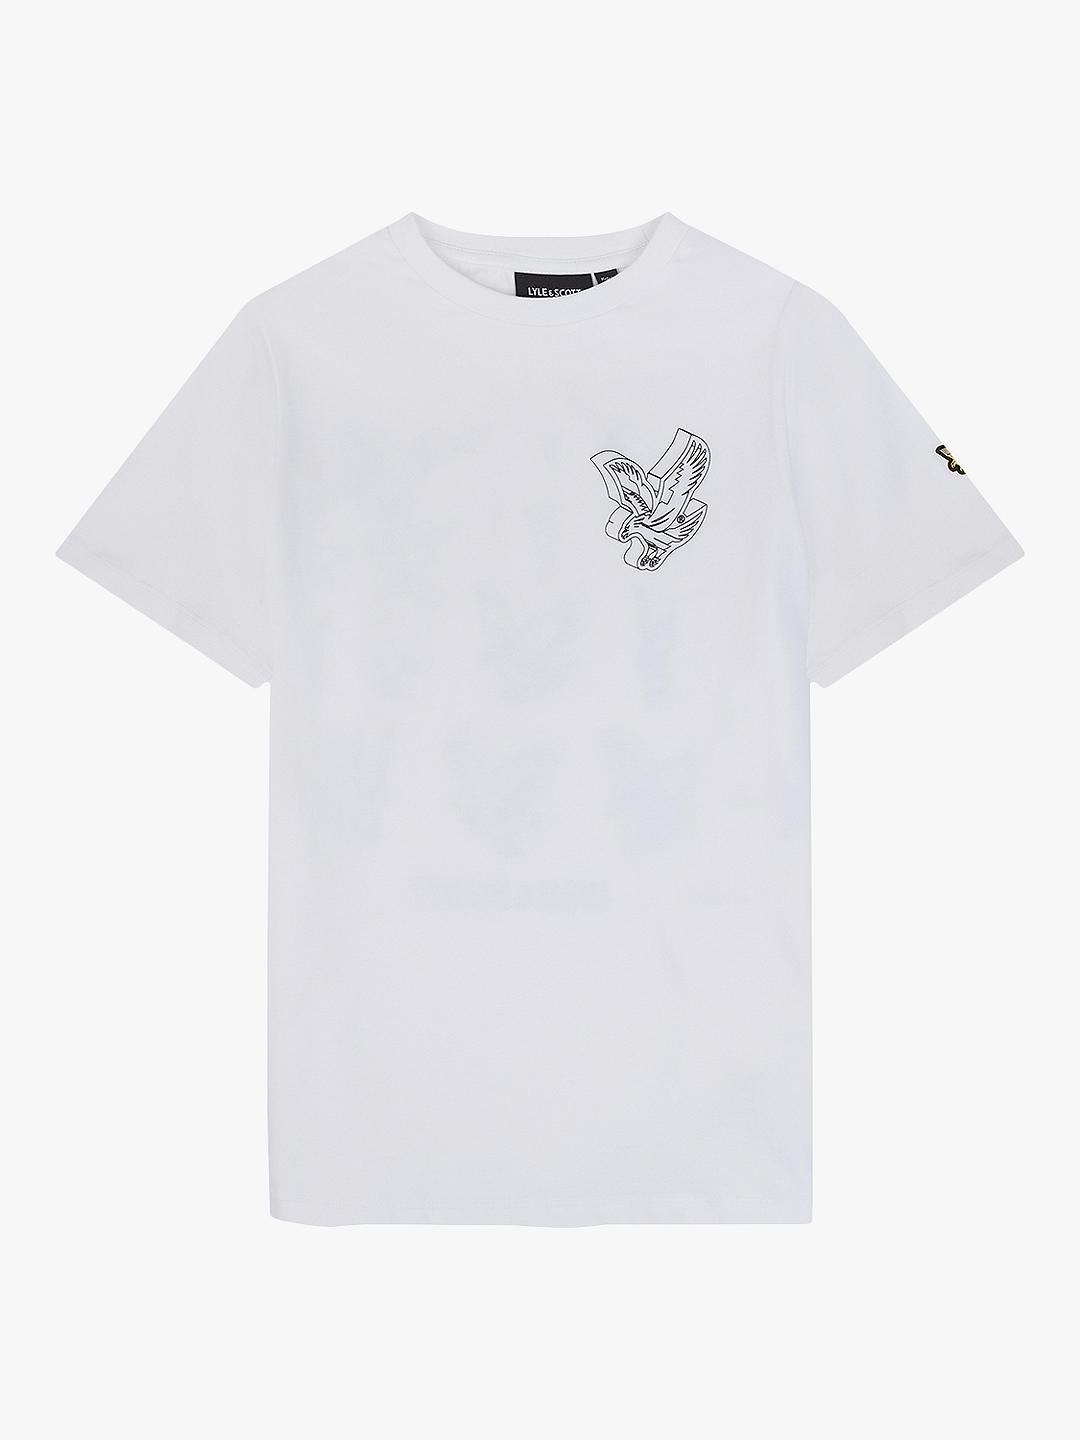 Lyle & Scott Kids' 3D Eagle Graphic T-Shirt, White